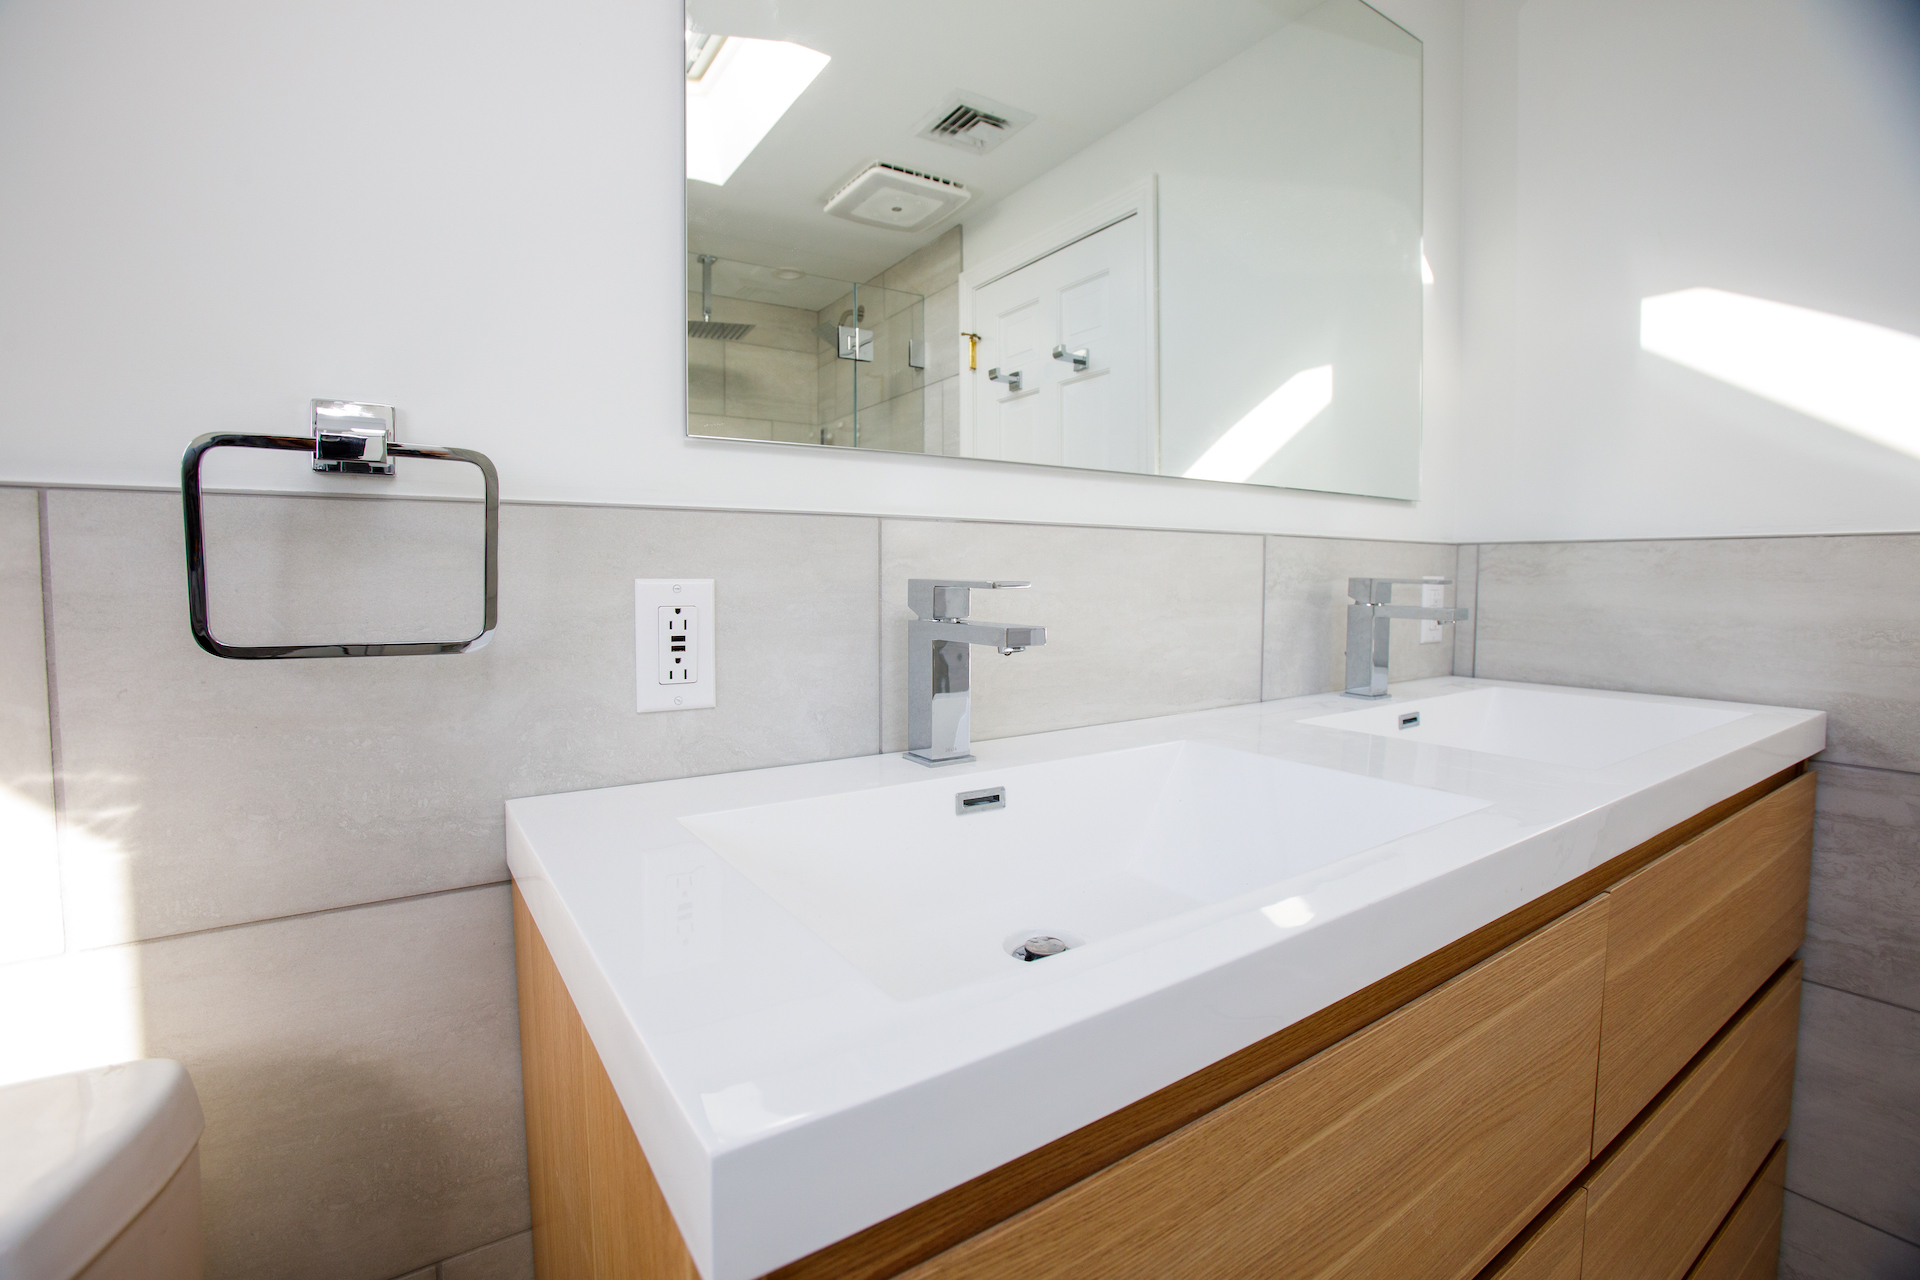 batheroom remodeling contractor bathroom renovation provost companies milton ma